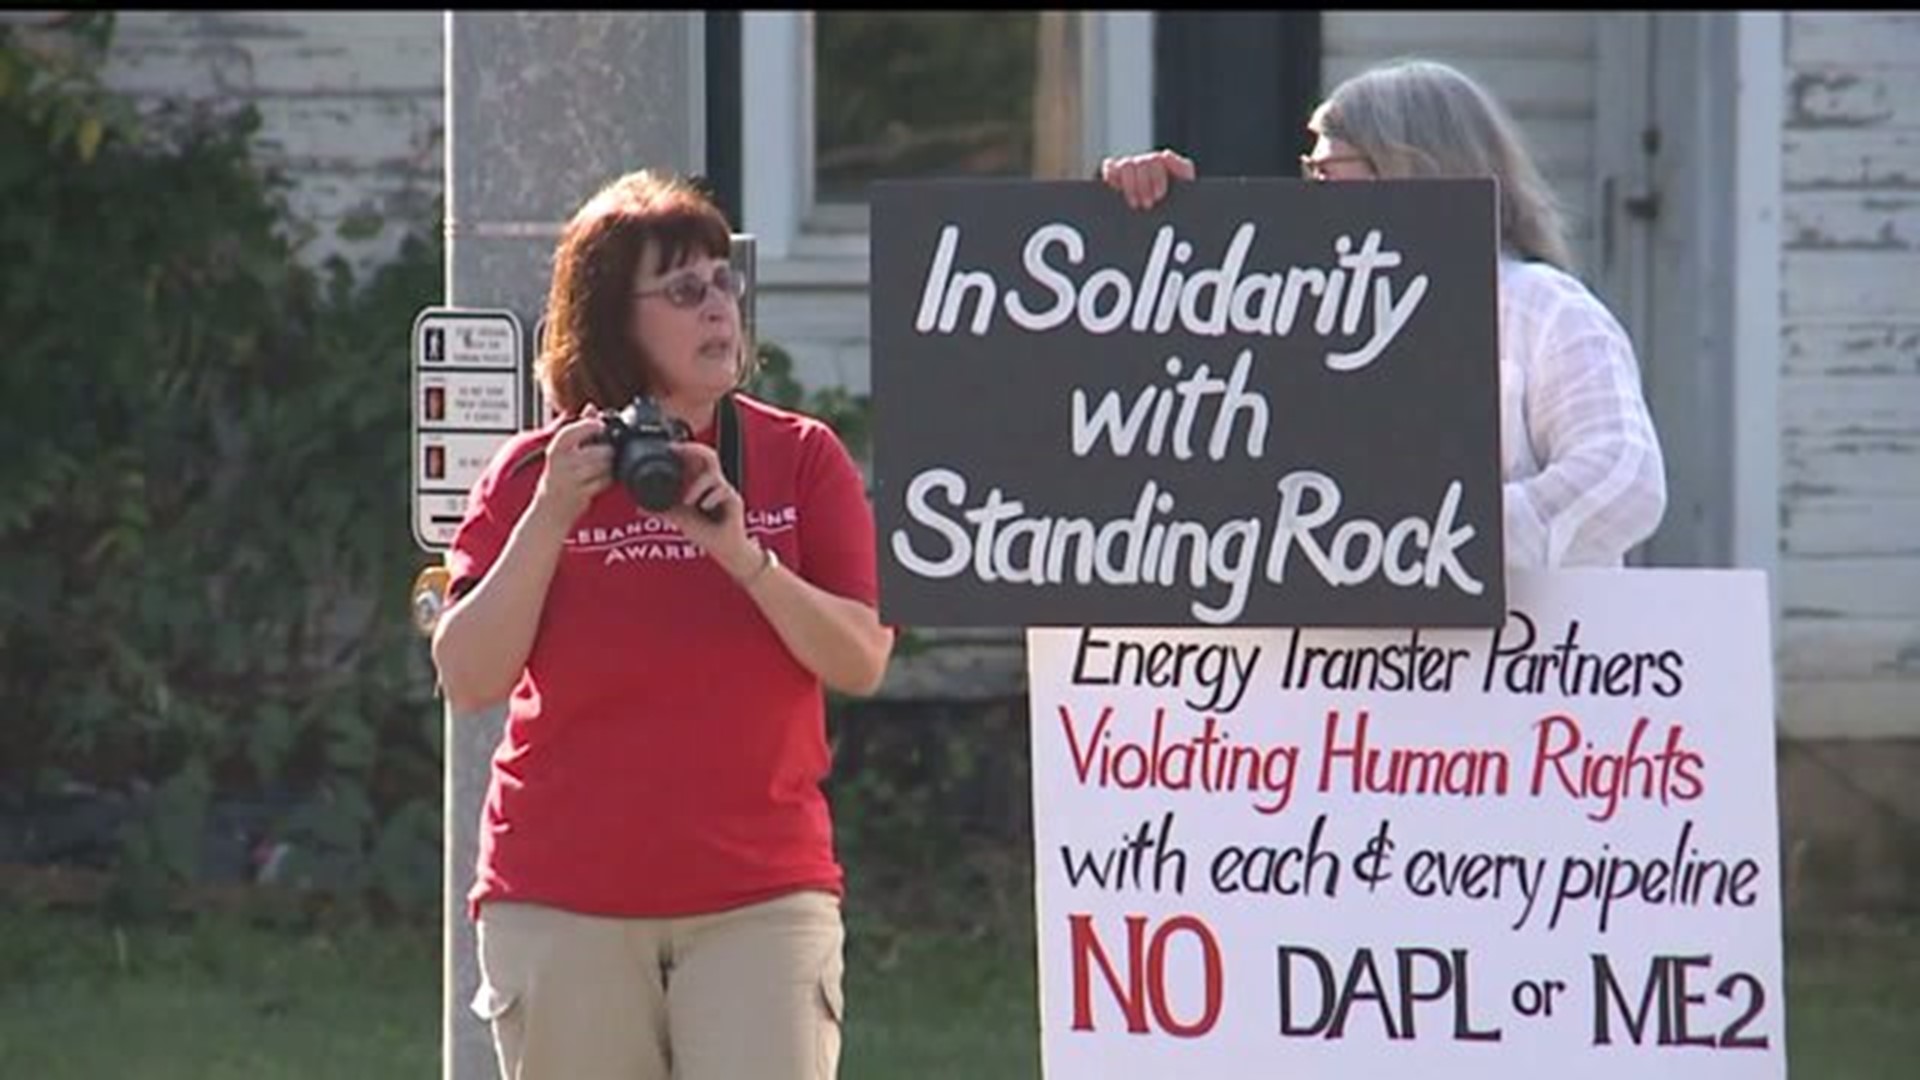 Protests in Lancaster, Lebanon County against Dakota Access Pipeline